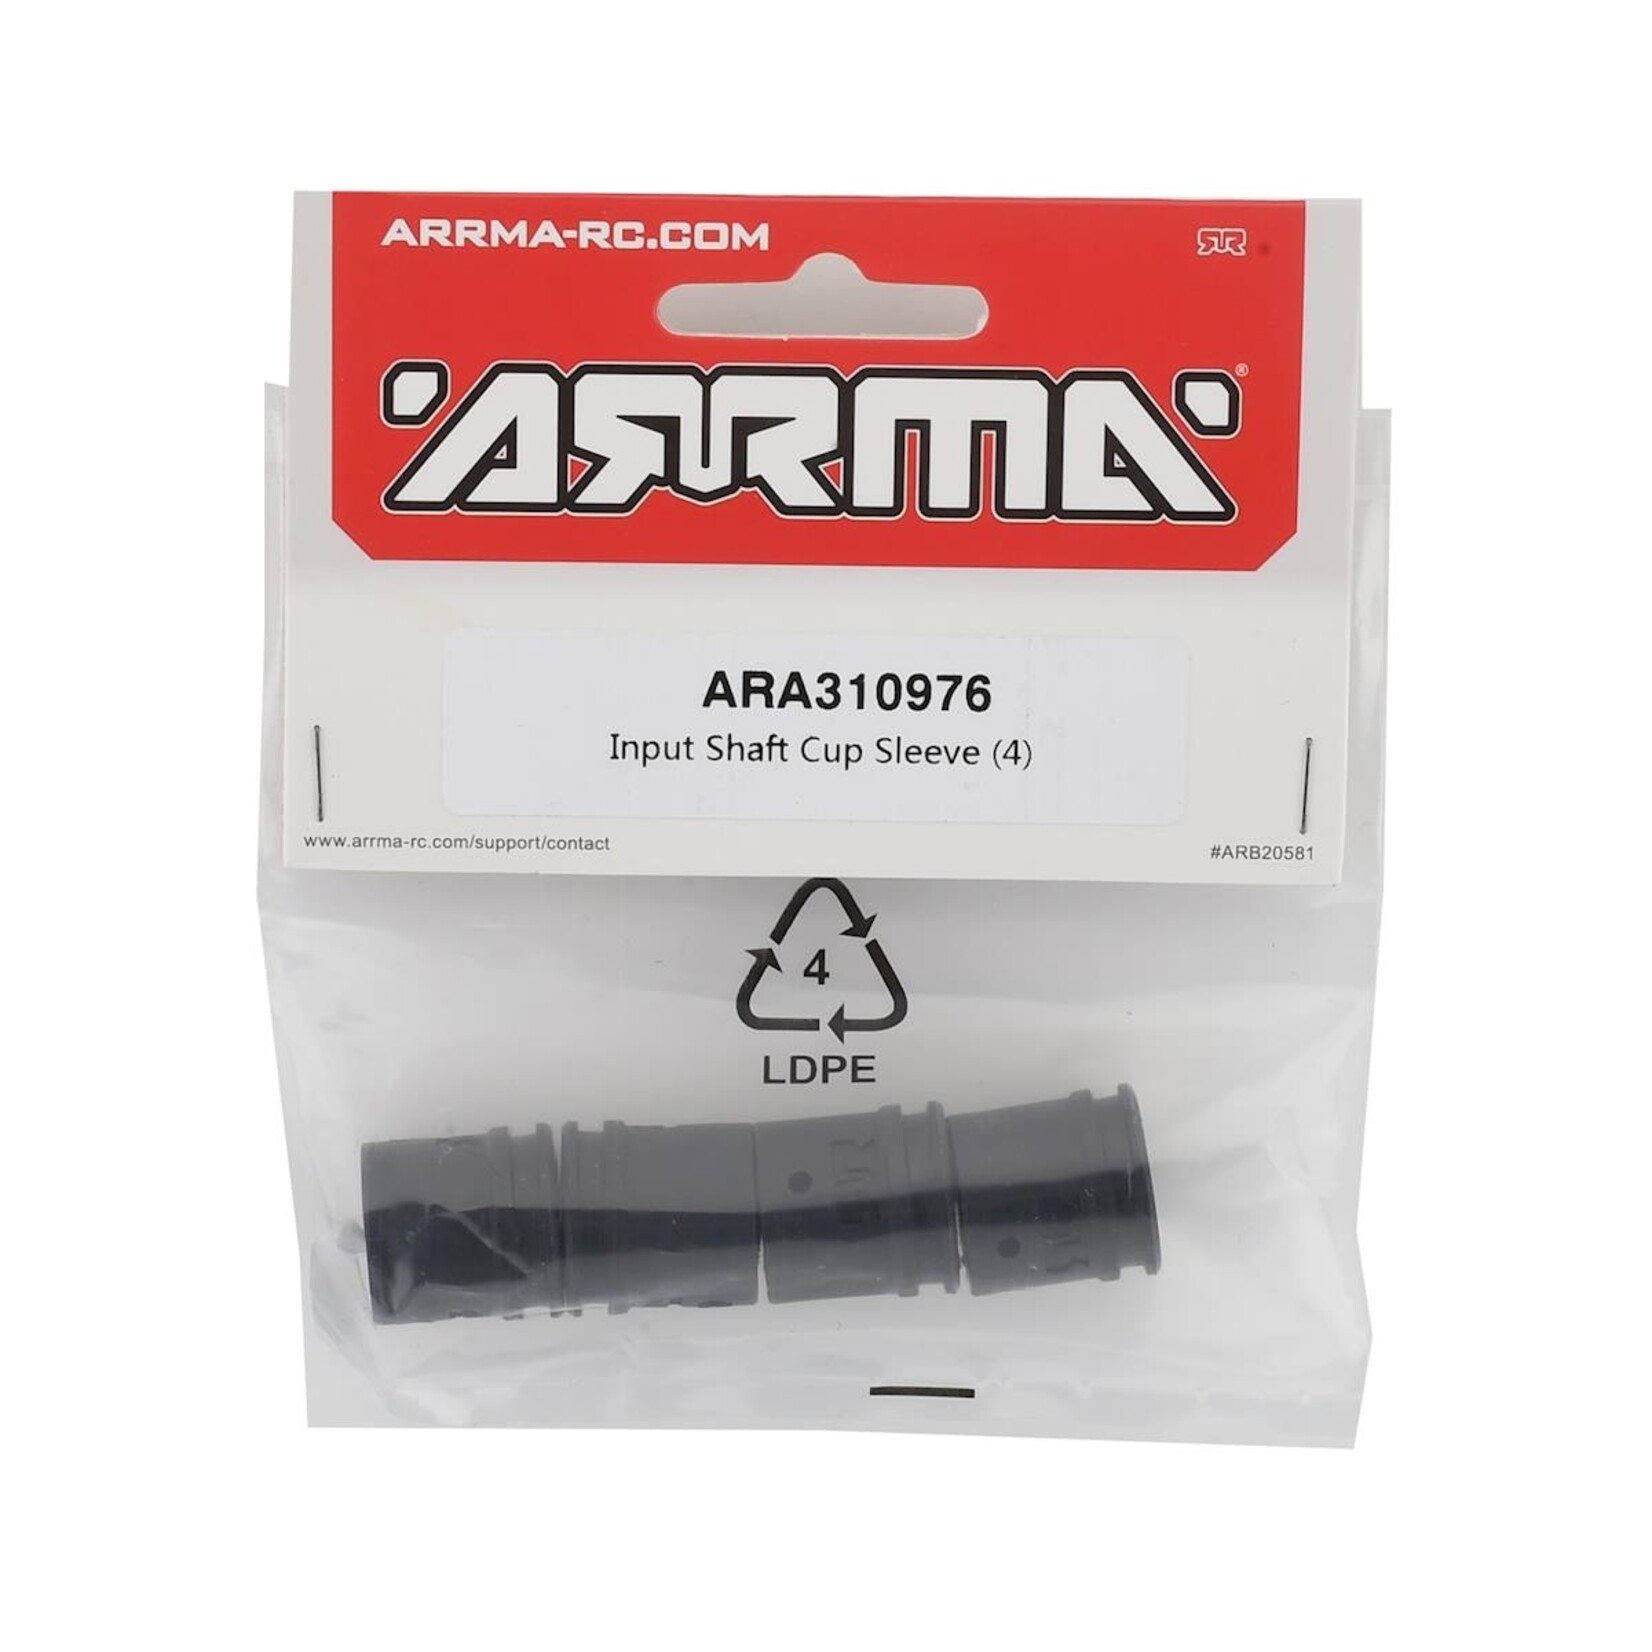 ARRMA Arrma Kraton EXB Input Shaft Cup Sleeve (4) #ARA310976